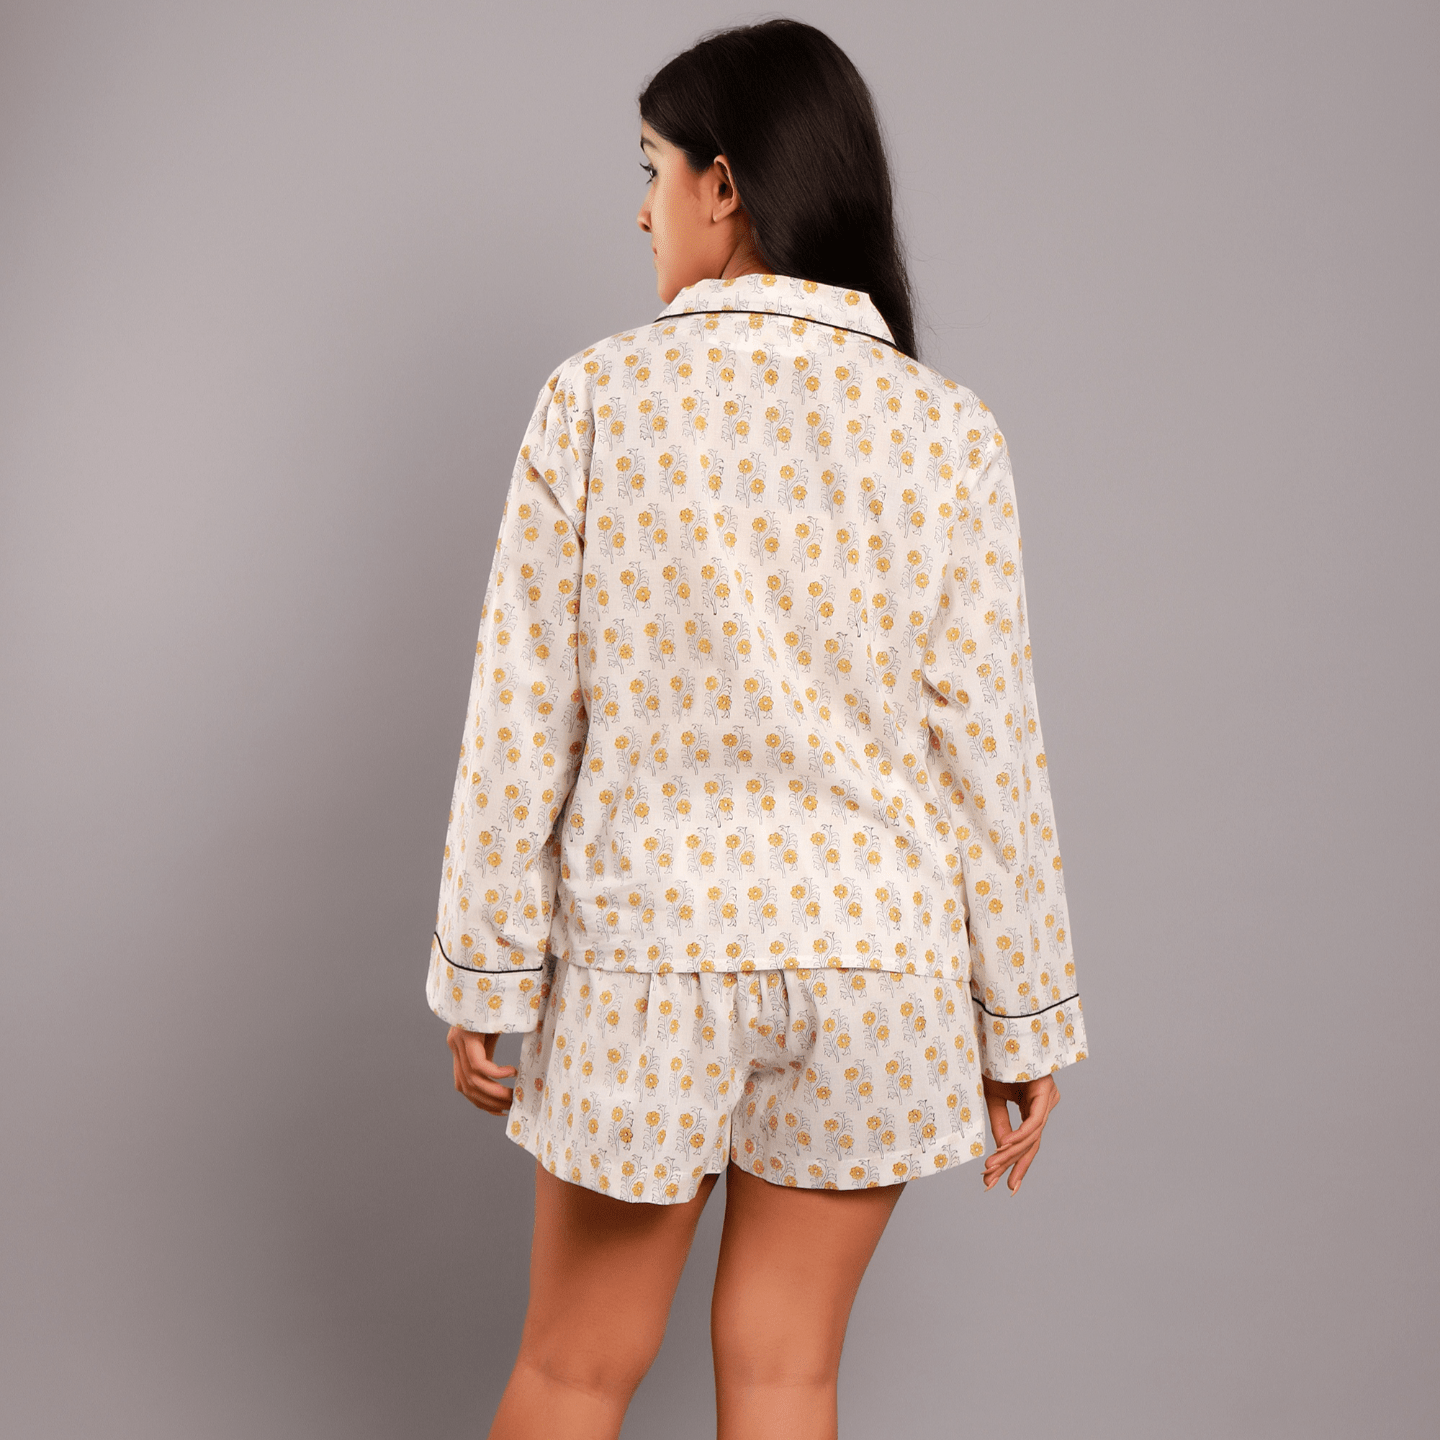 Women nightsuit shorts Ethnic buti yellow block printed